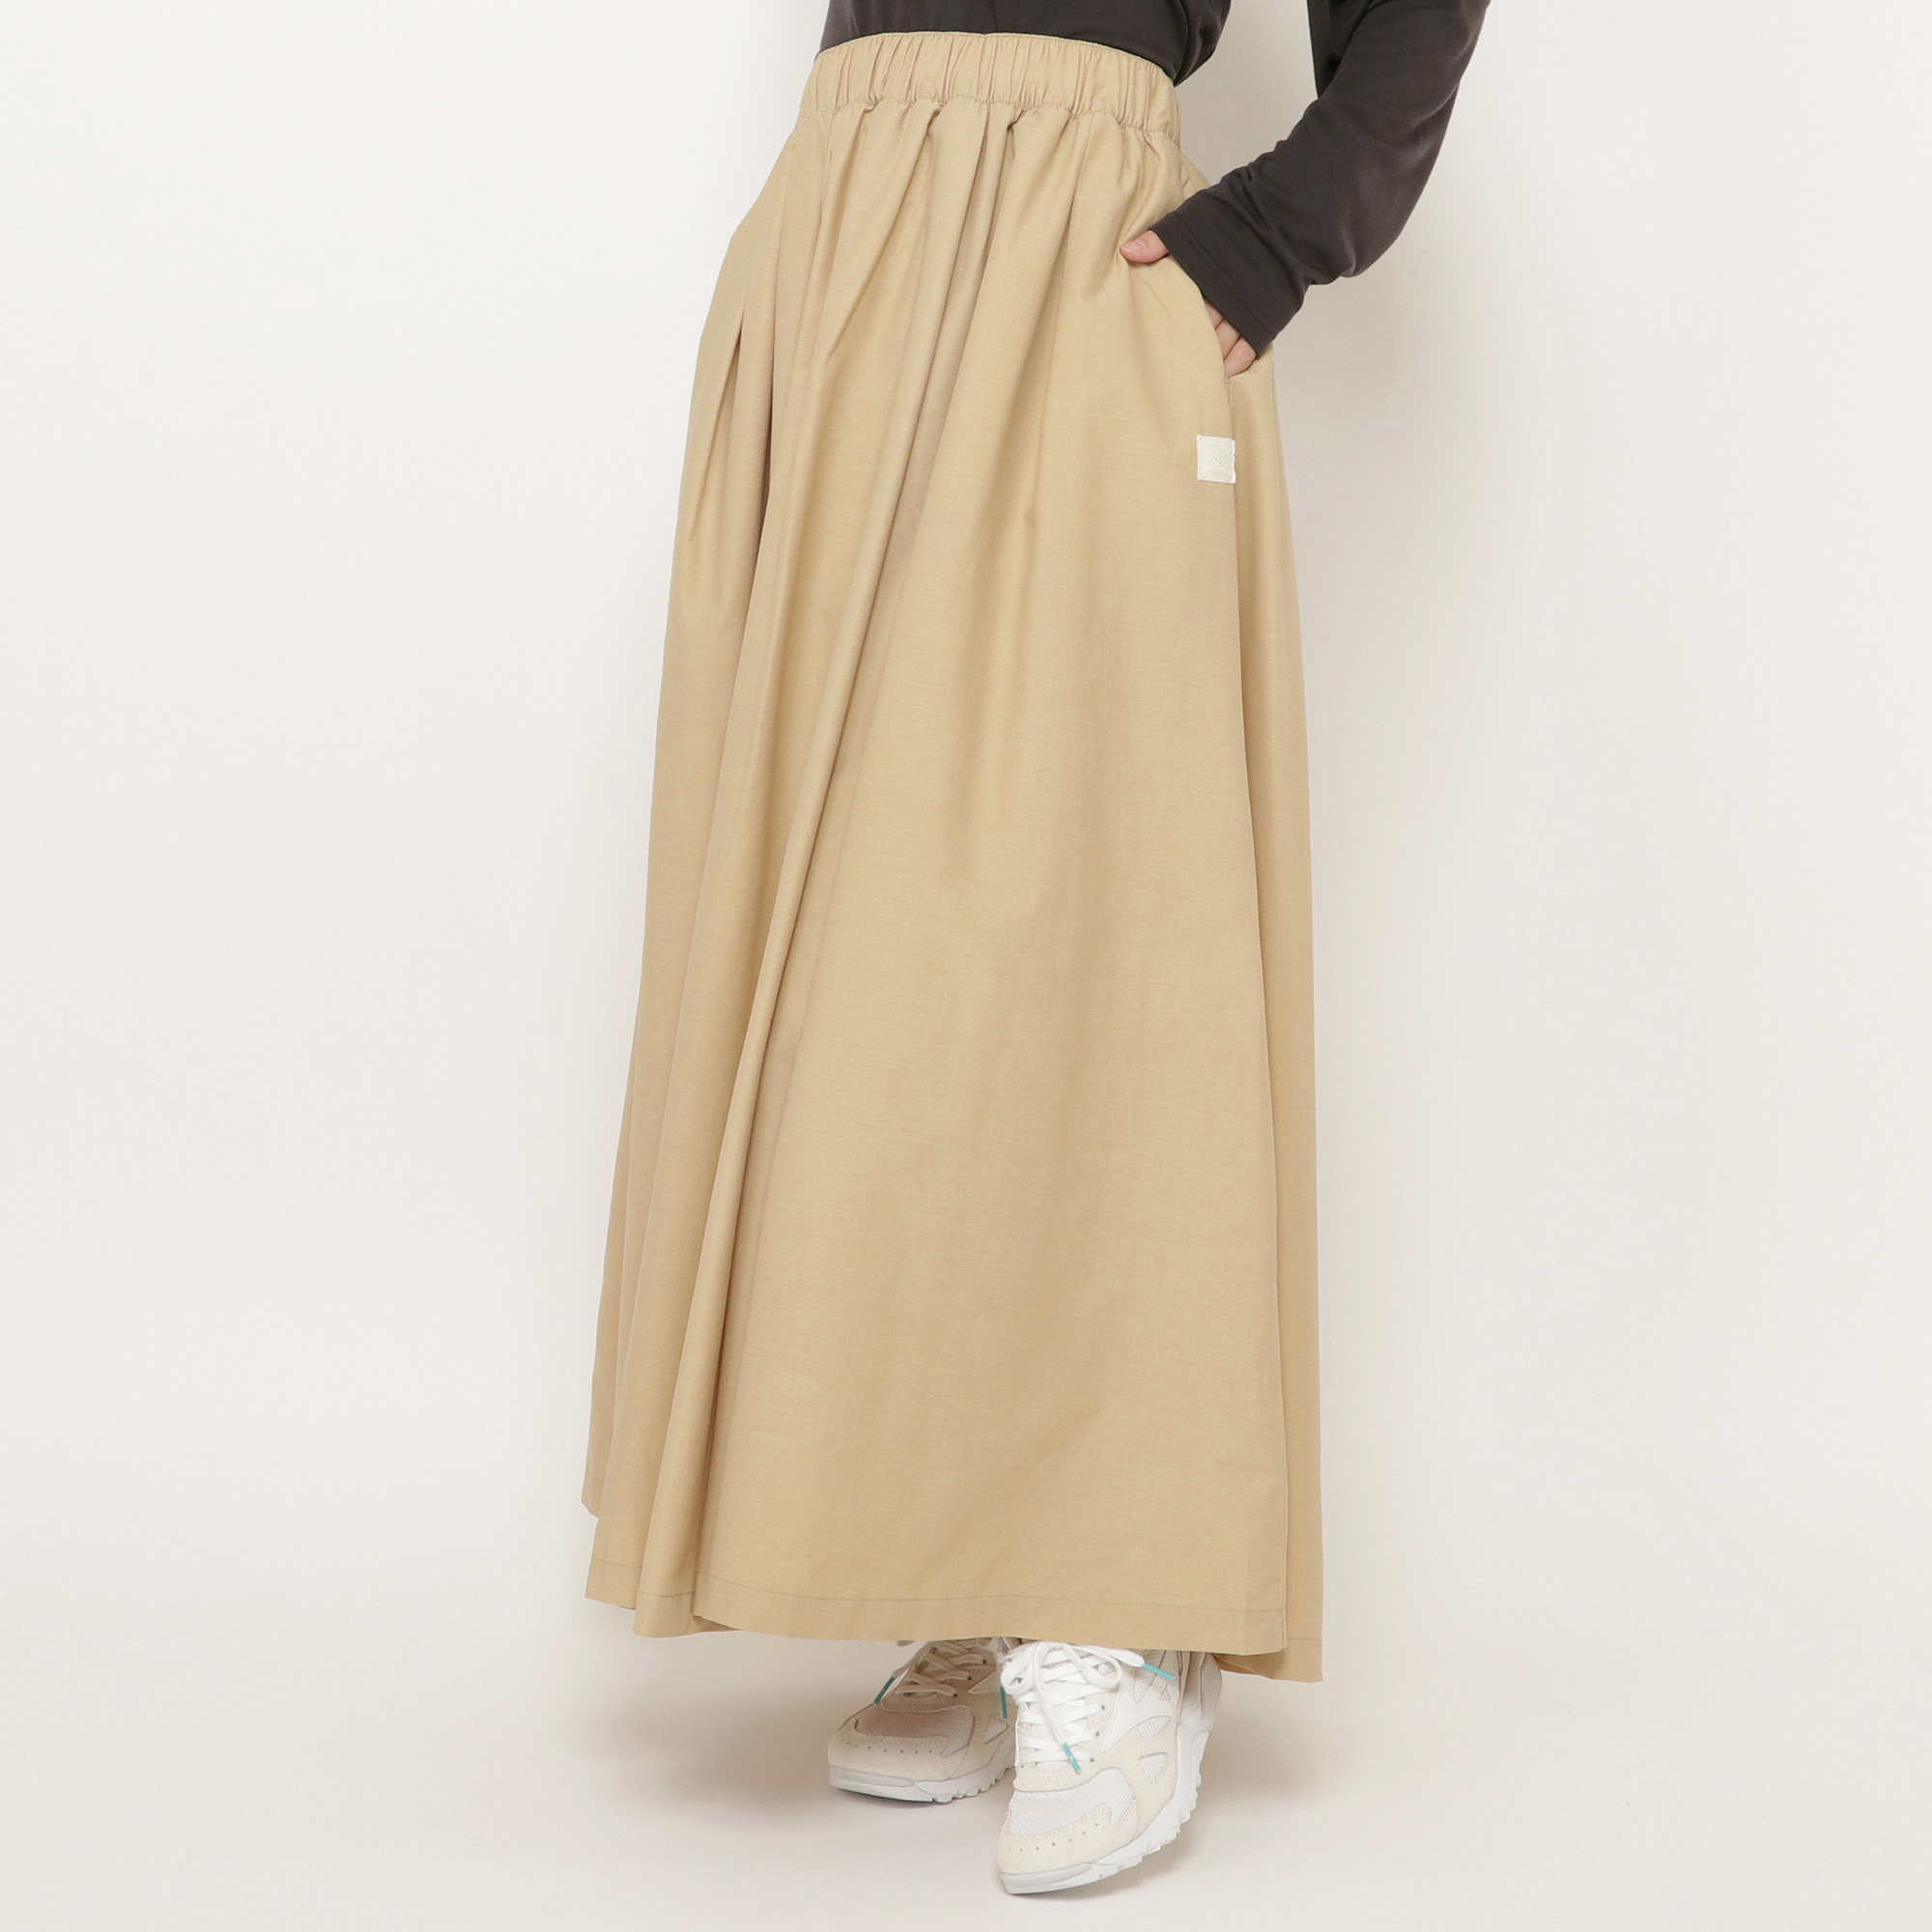 【Rikako Ikee Collection】UNTANGLE IT(アンタングル) ボリュームロングスカート[ウィメンズ]